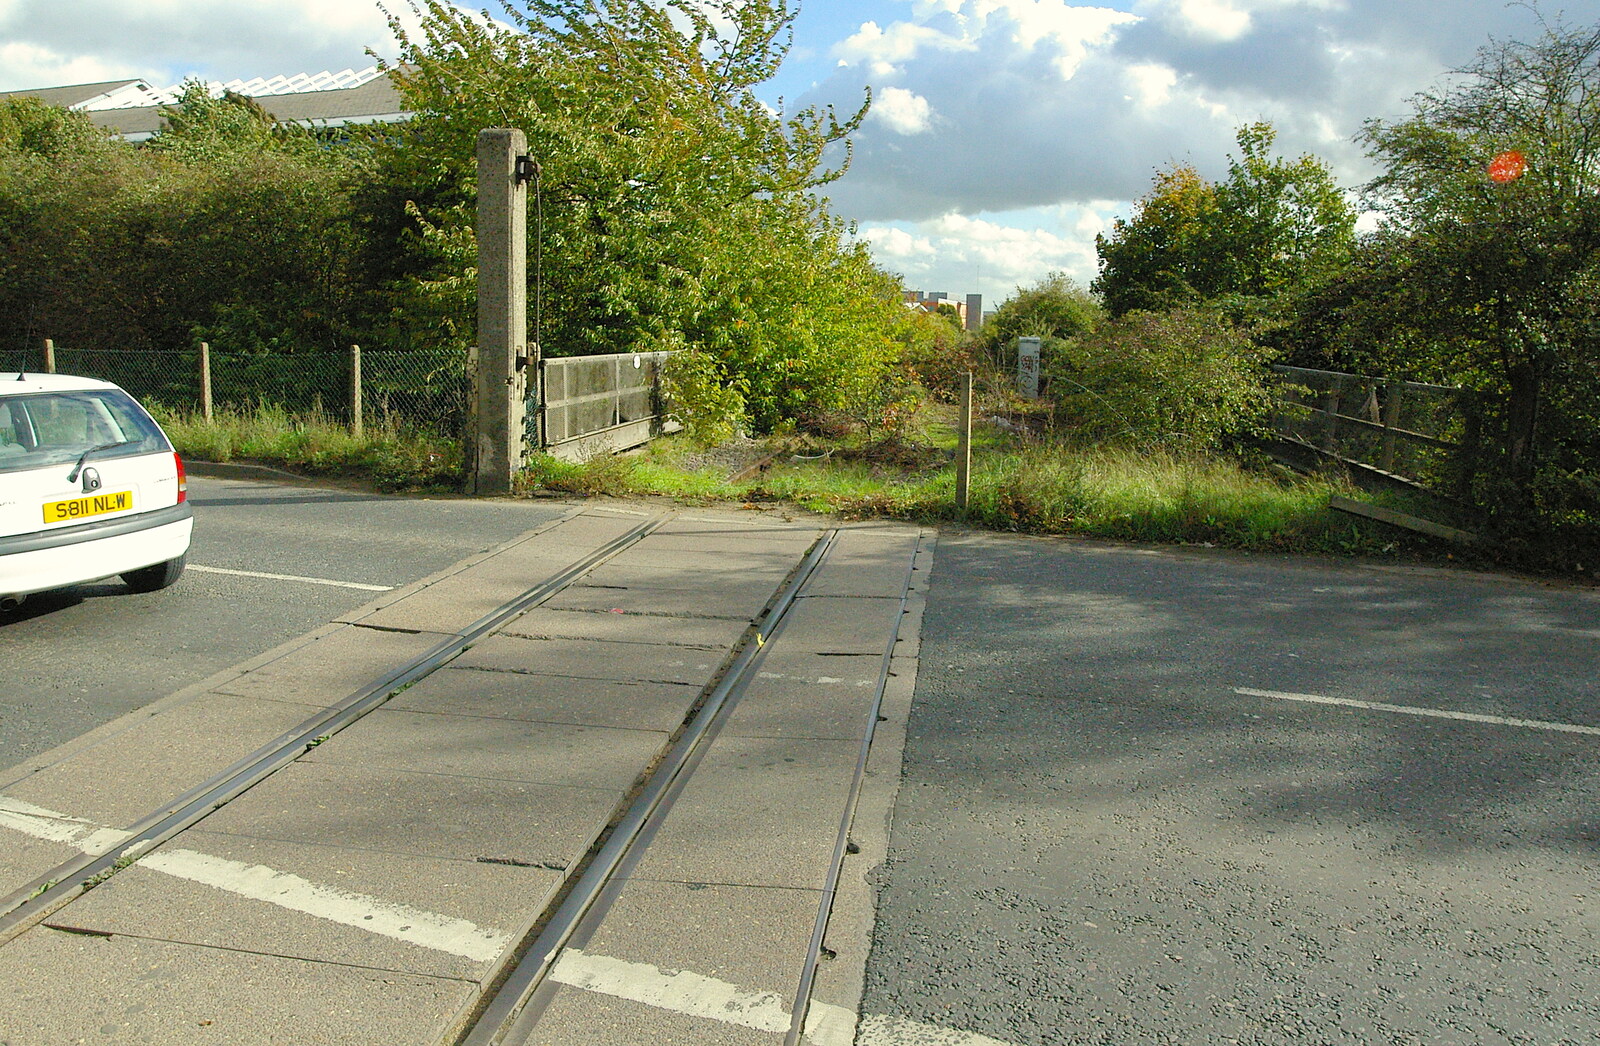 Disused Cambridge Railway, Milton Road, Cambridge - 28th October 2005: Where the tracks cross Milton Road